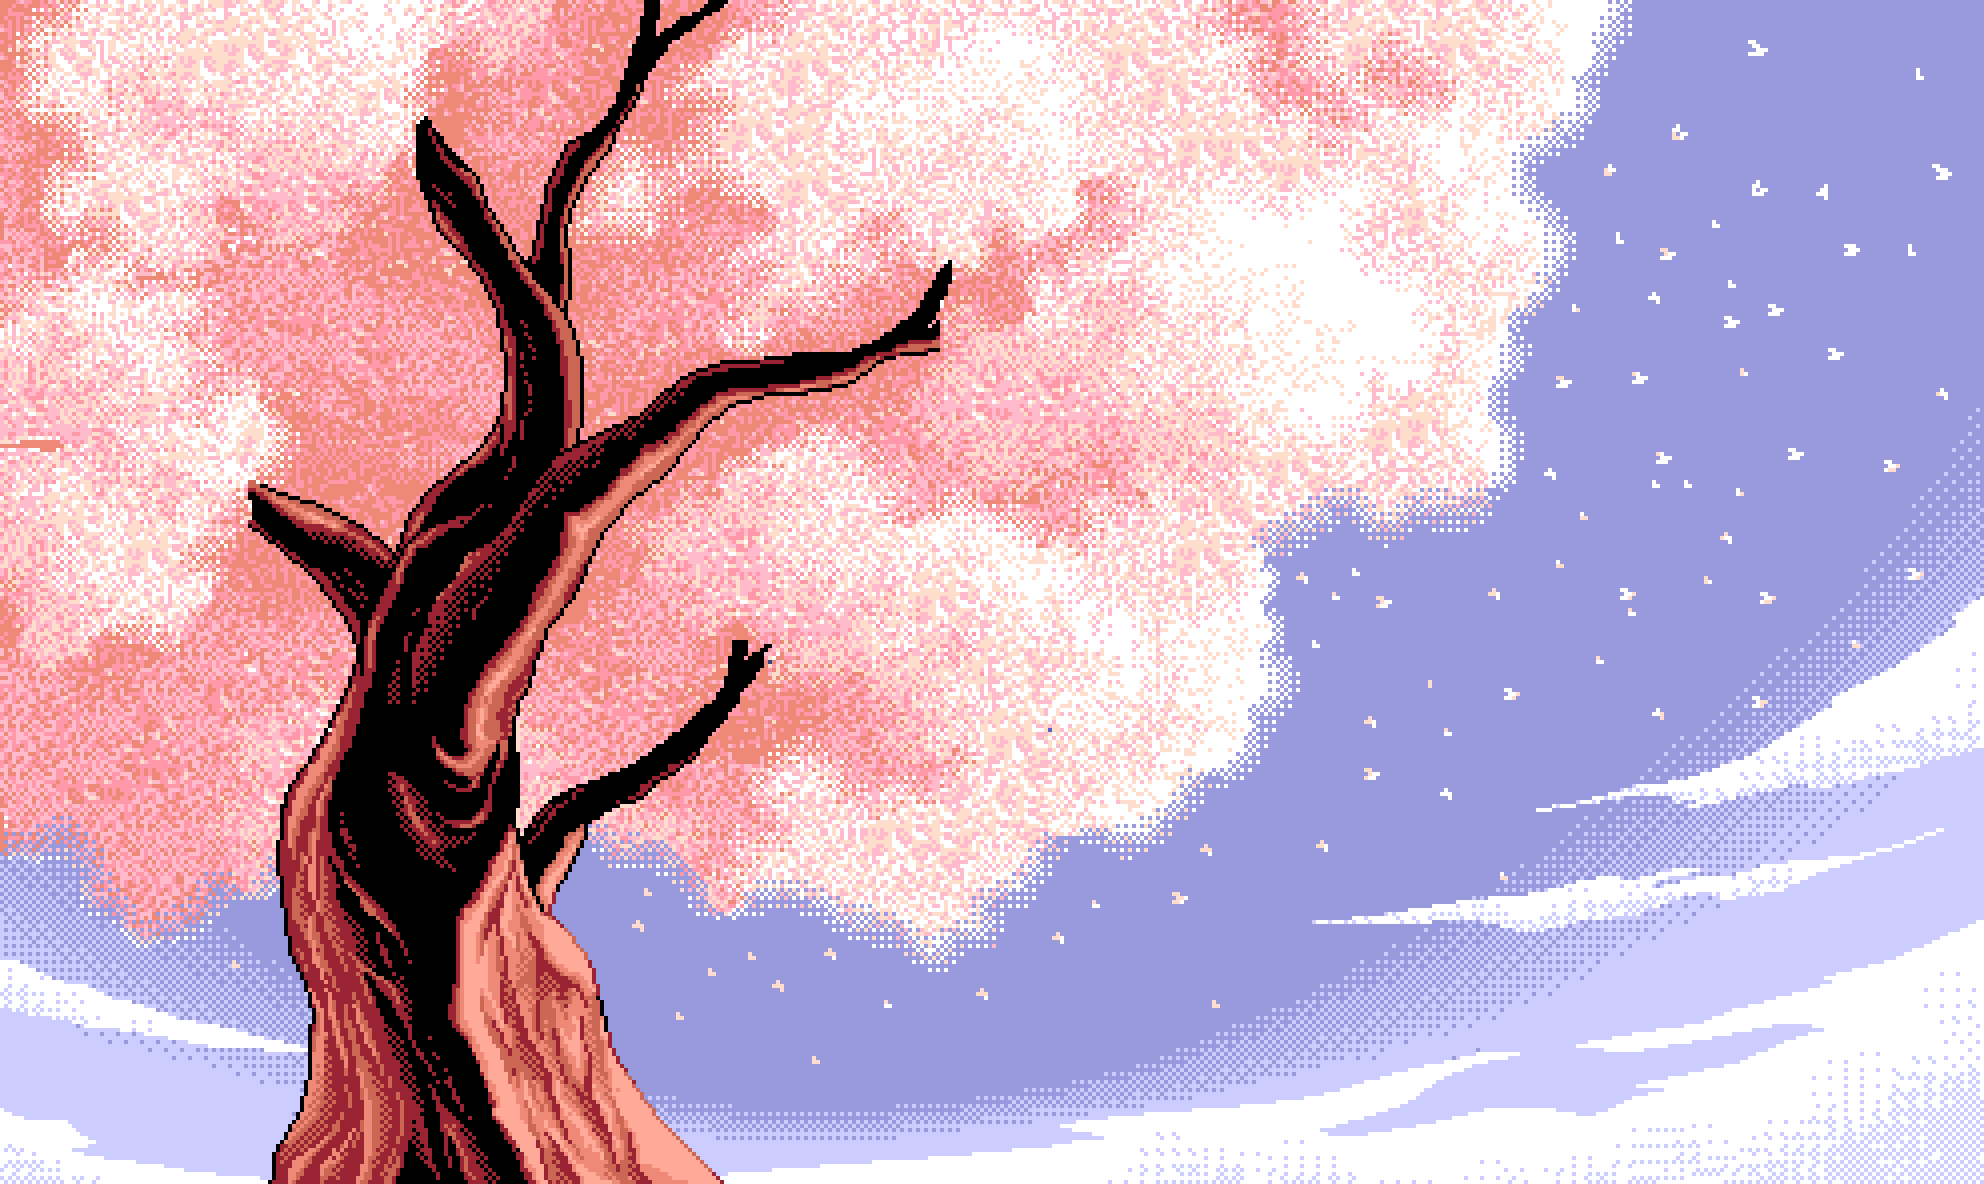 Pixel Art Cherry Trees Cherry Blossom Pink Pixelated Petals Trees 1984x1184